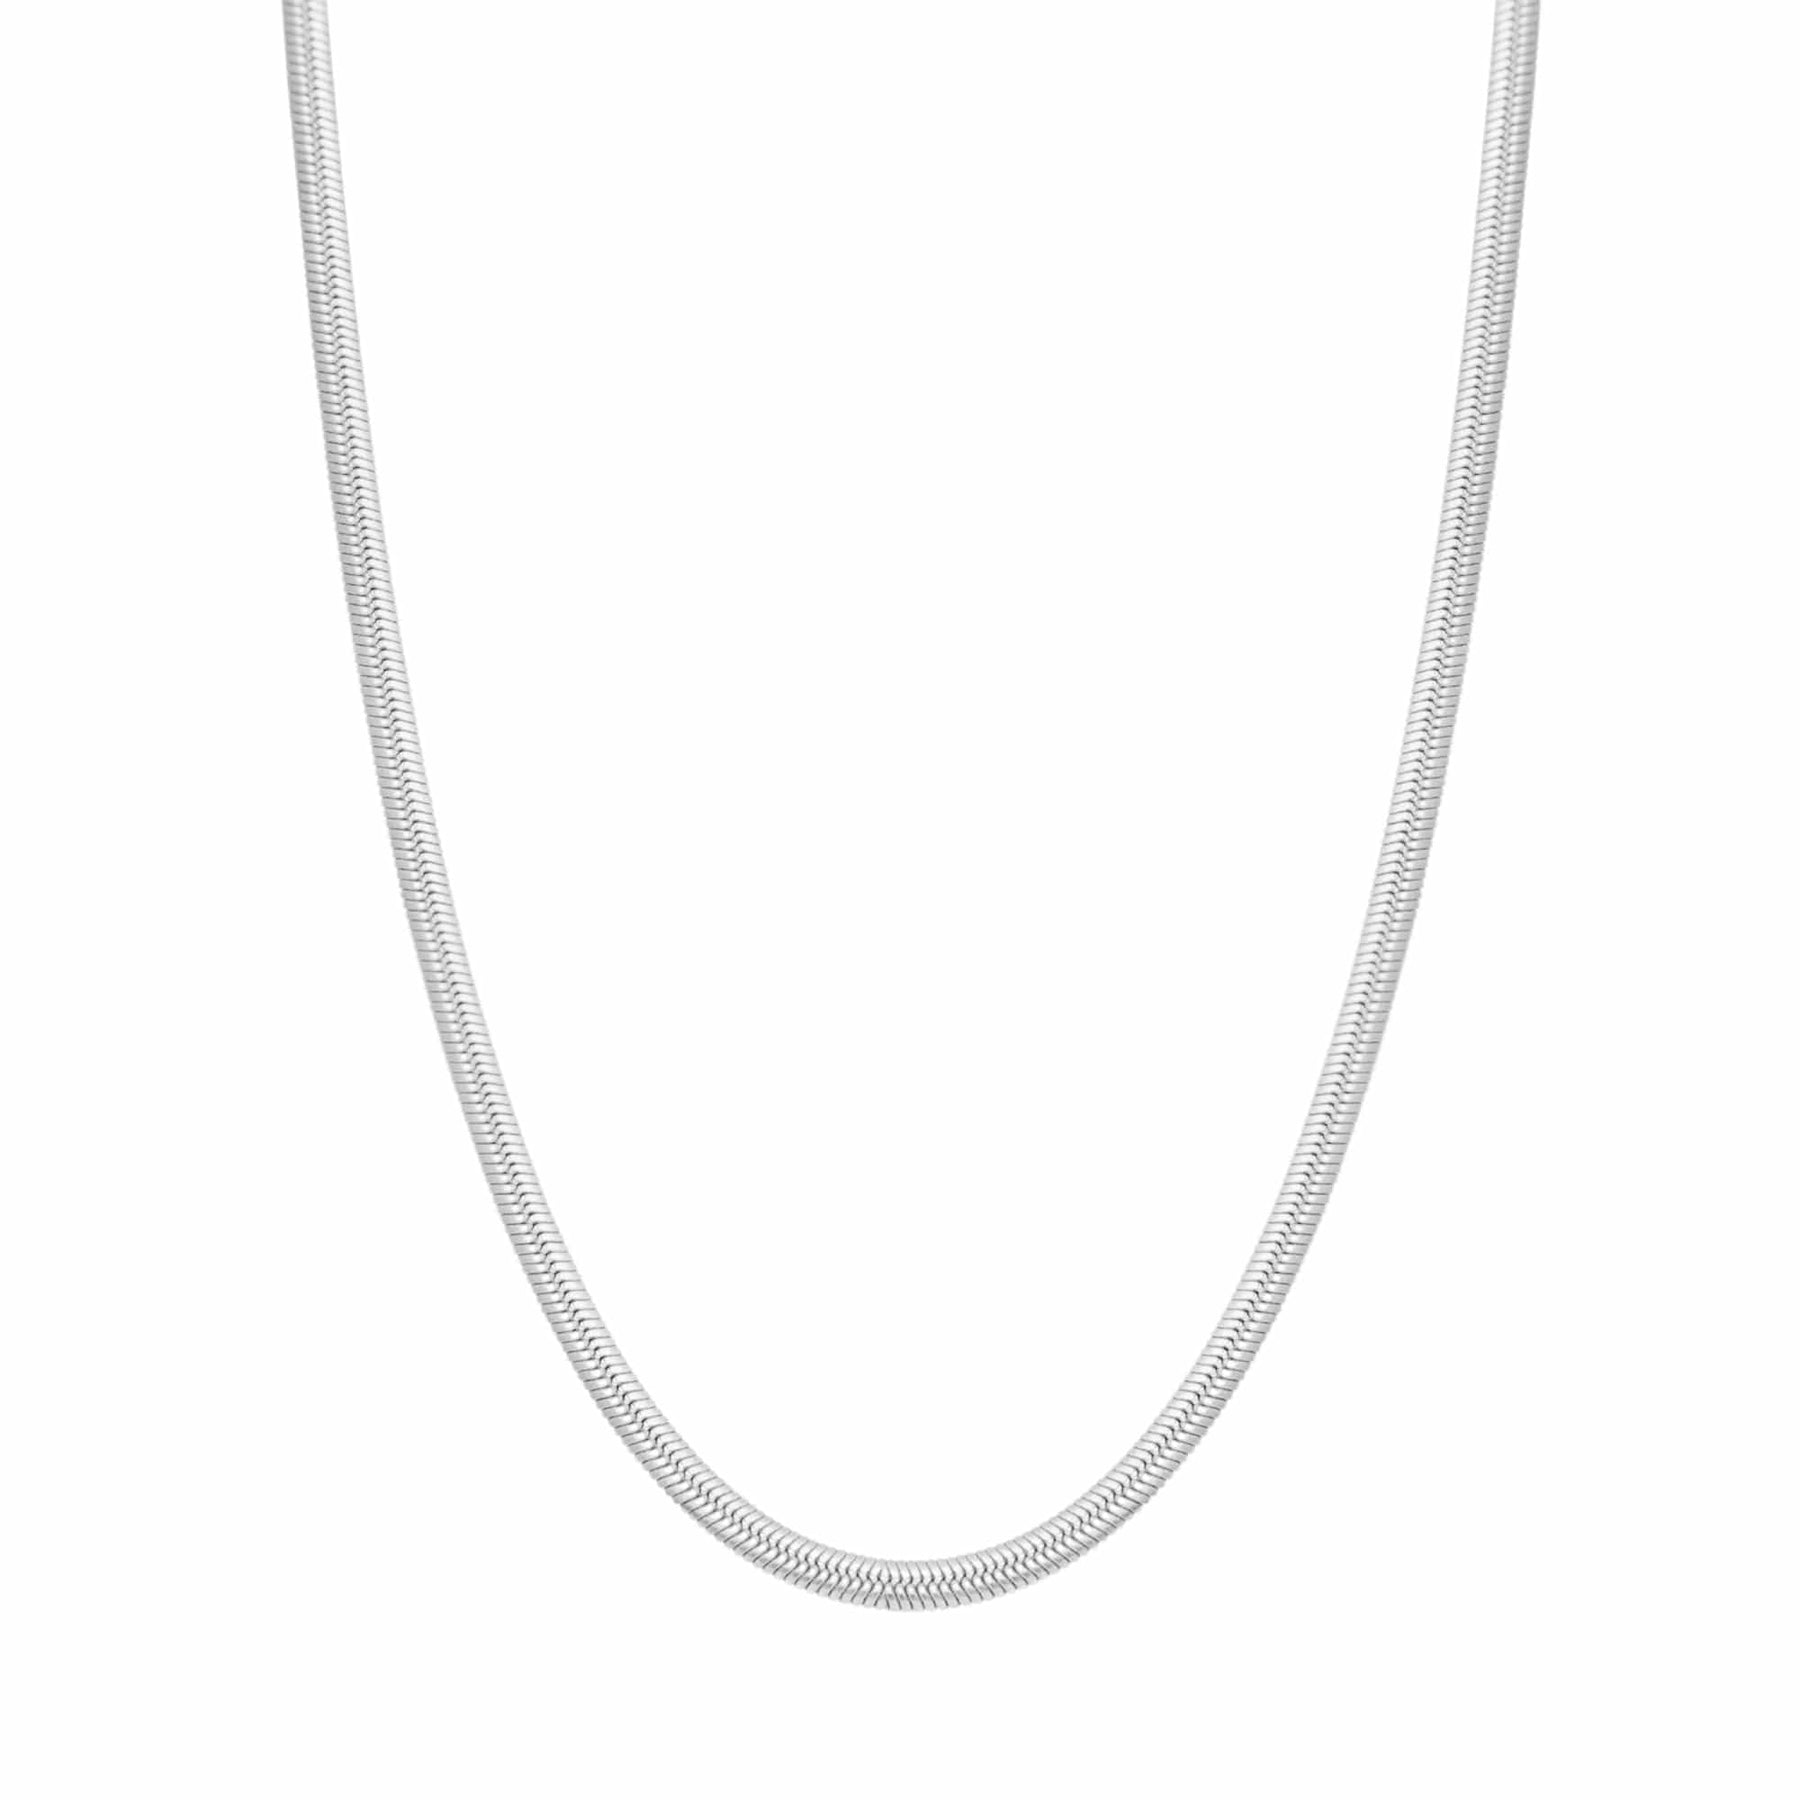 BohoMoon Stainless Steel Dainty Herringbone Choker / Necklace Silver / Necklace